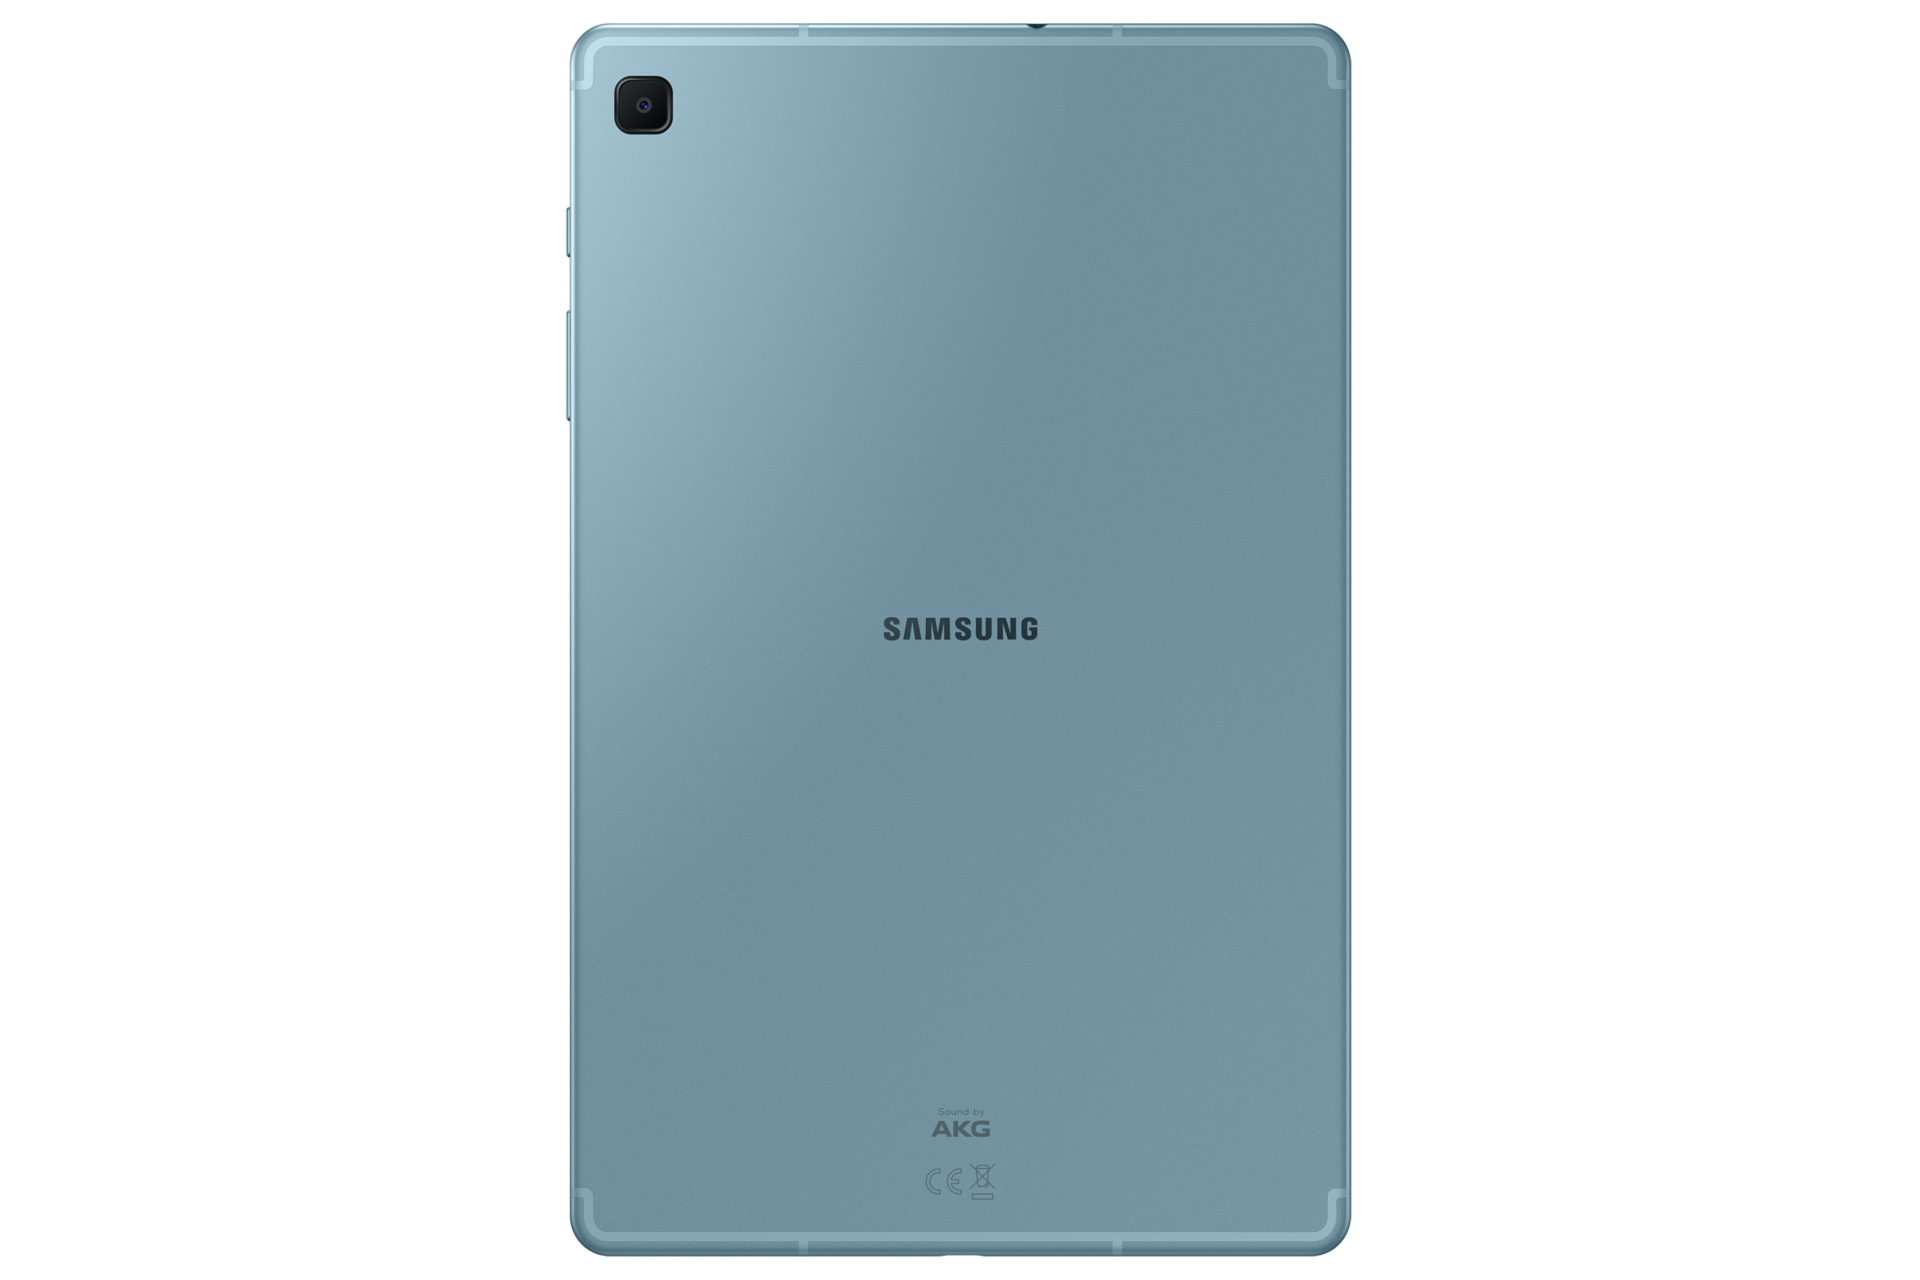  Samsung Galaxy Tab S6 Lite 10.4, 64GB WiFi Tablet - SM-P610 -  S Pen Included (International Model) (Angora Blue) : Electronics